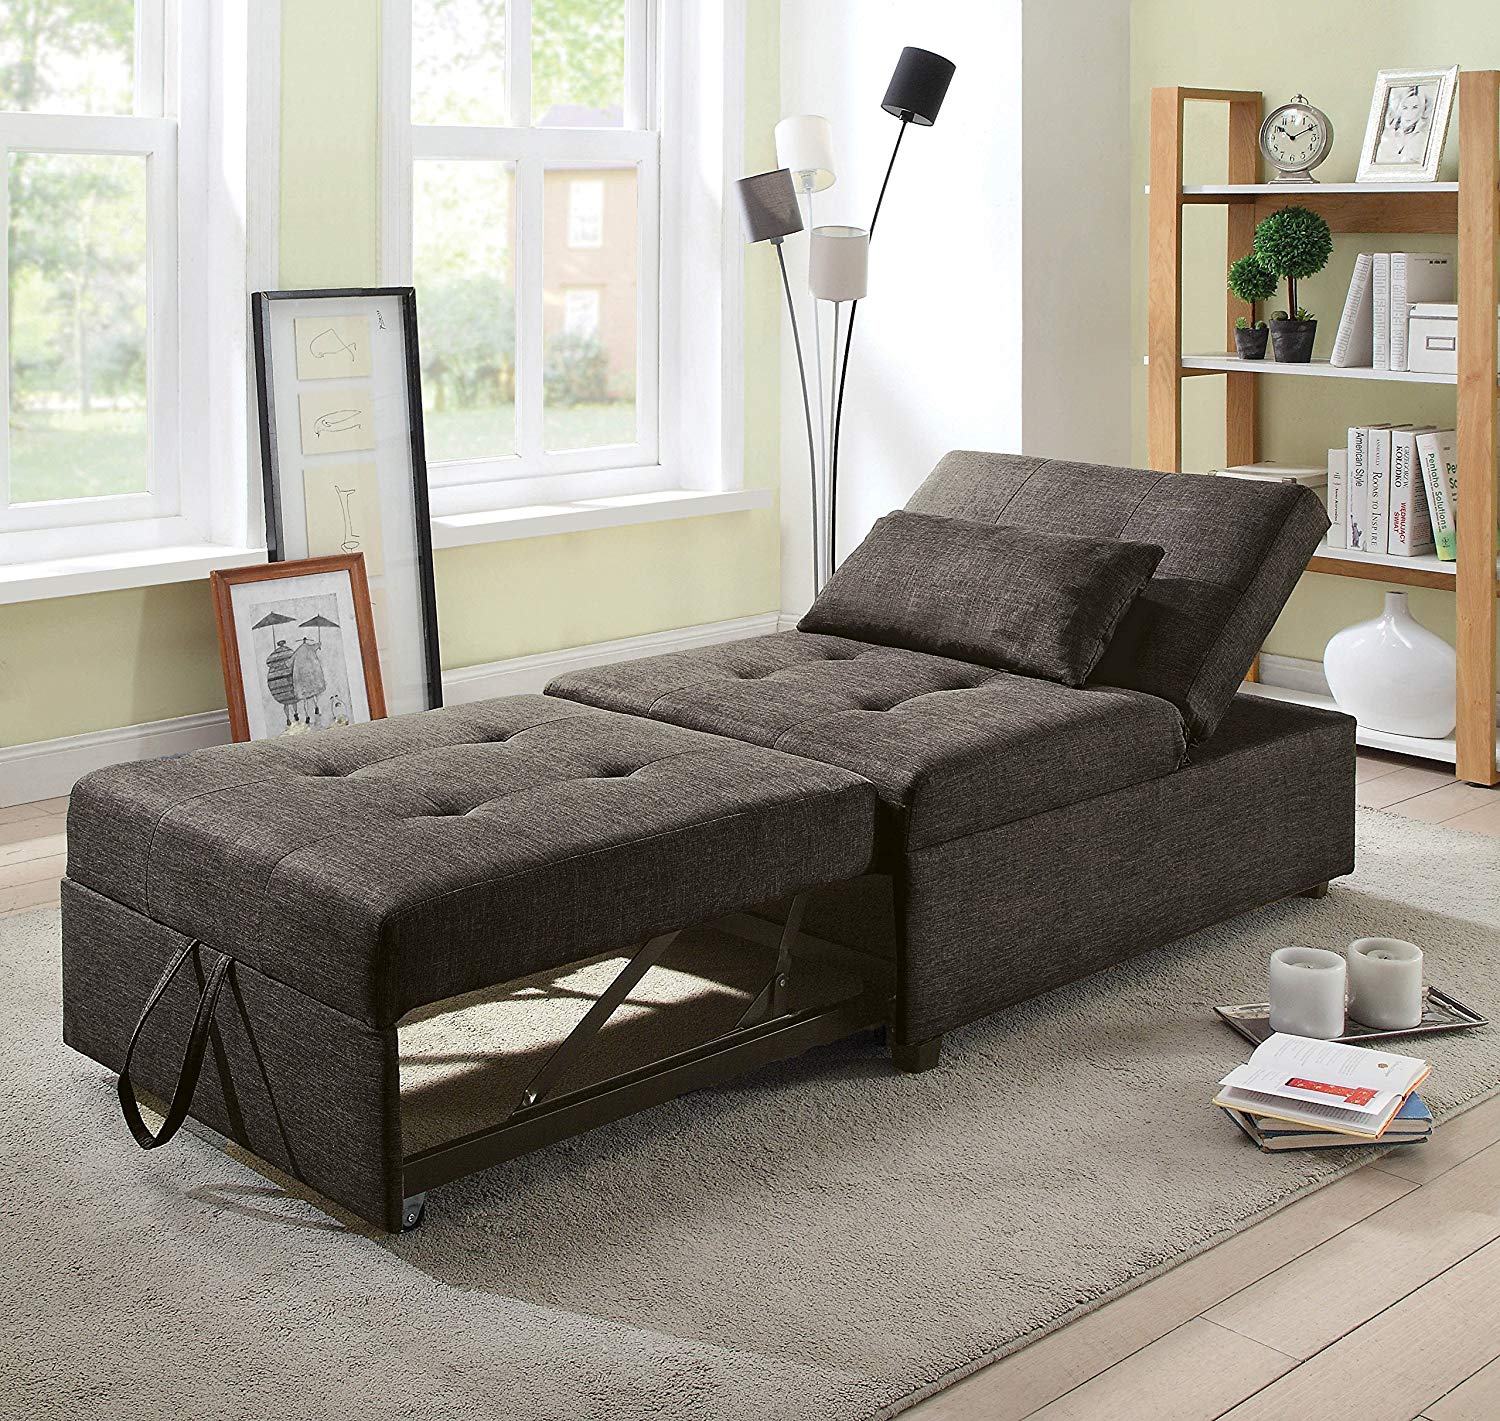 https://www.home-designing.com/wp-content/uploads/2020/03/slide-out-pop-up-mattress-sleeper-chair-chaise-lounge-combination-space-saving-design.jpg